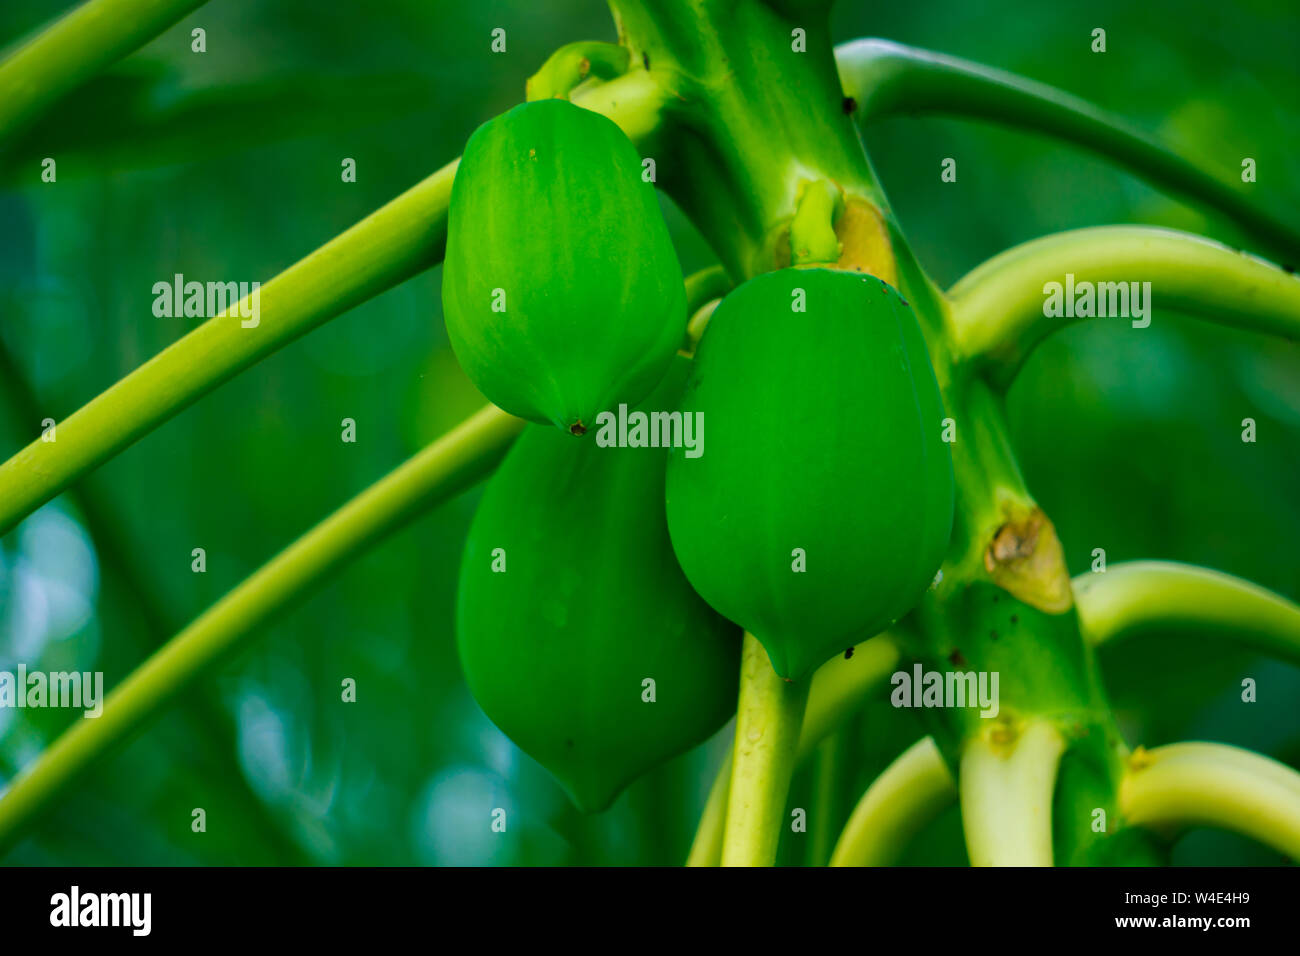 Pepe or Carica papaya L. Clean and green HD Image Stock Photo